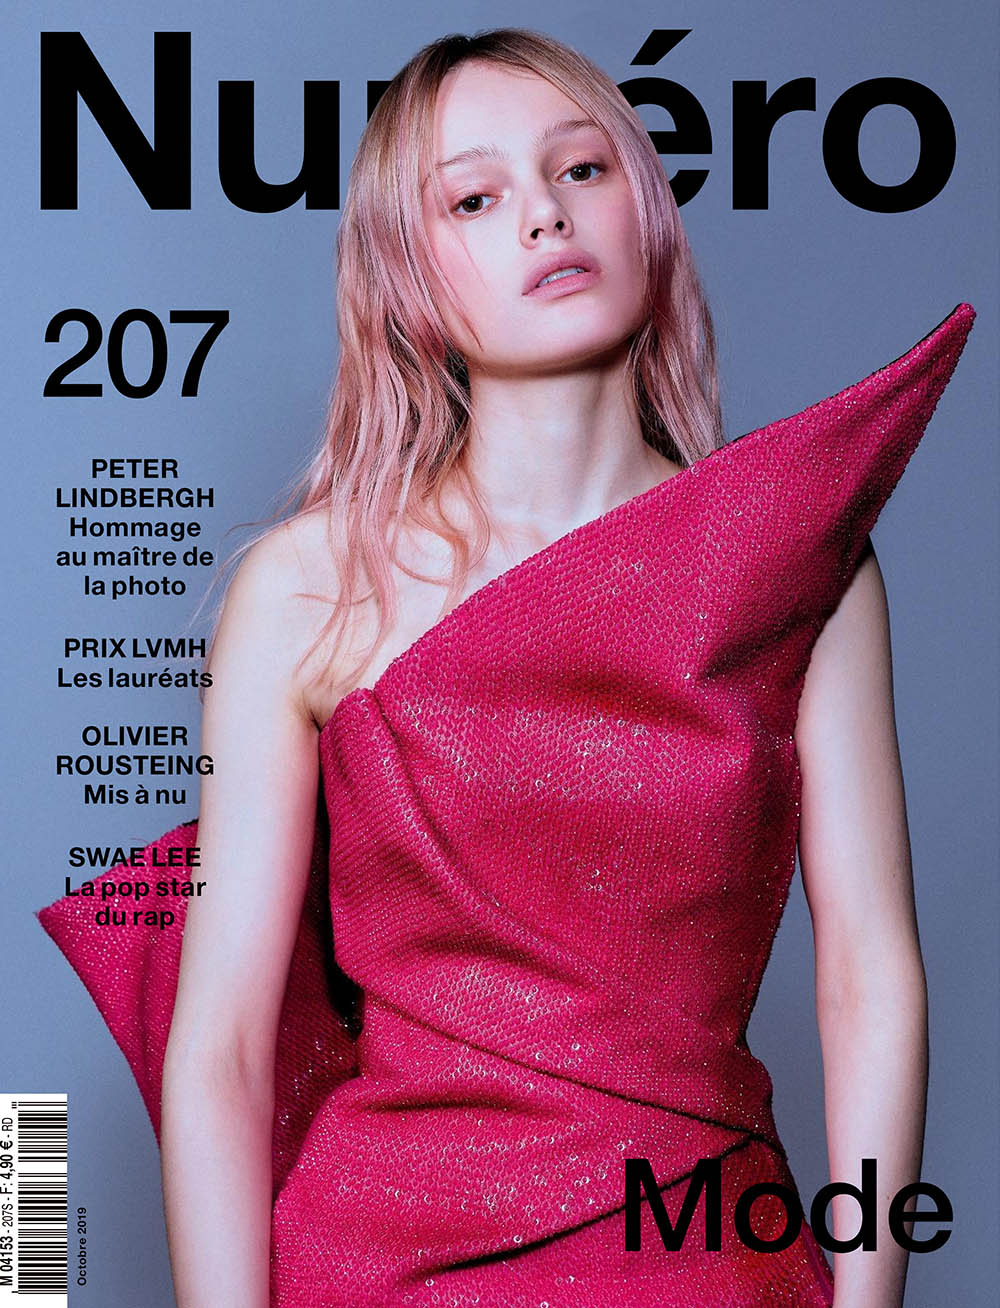 Simona Kust covers Numéro October 2019 by Jean-Baptiste Mondino